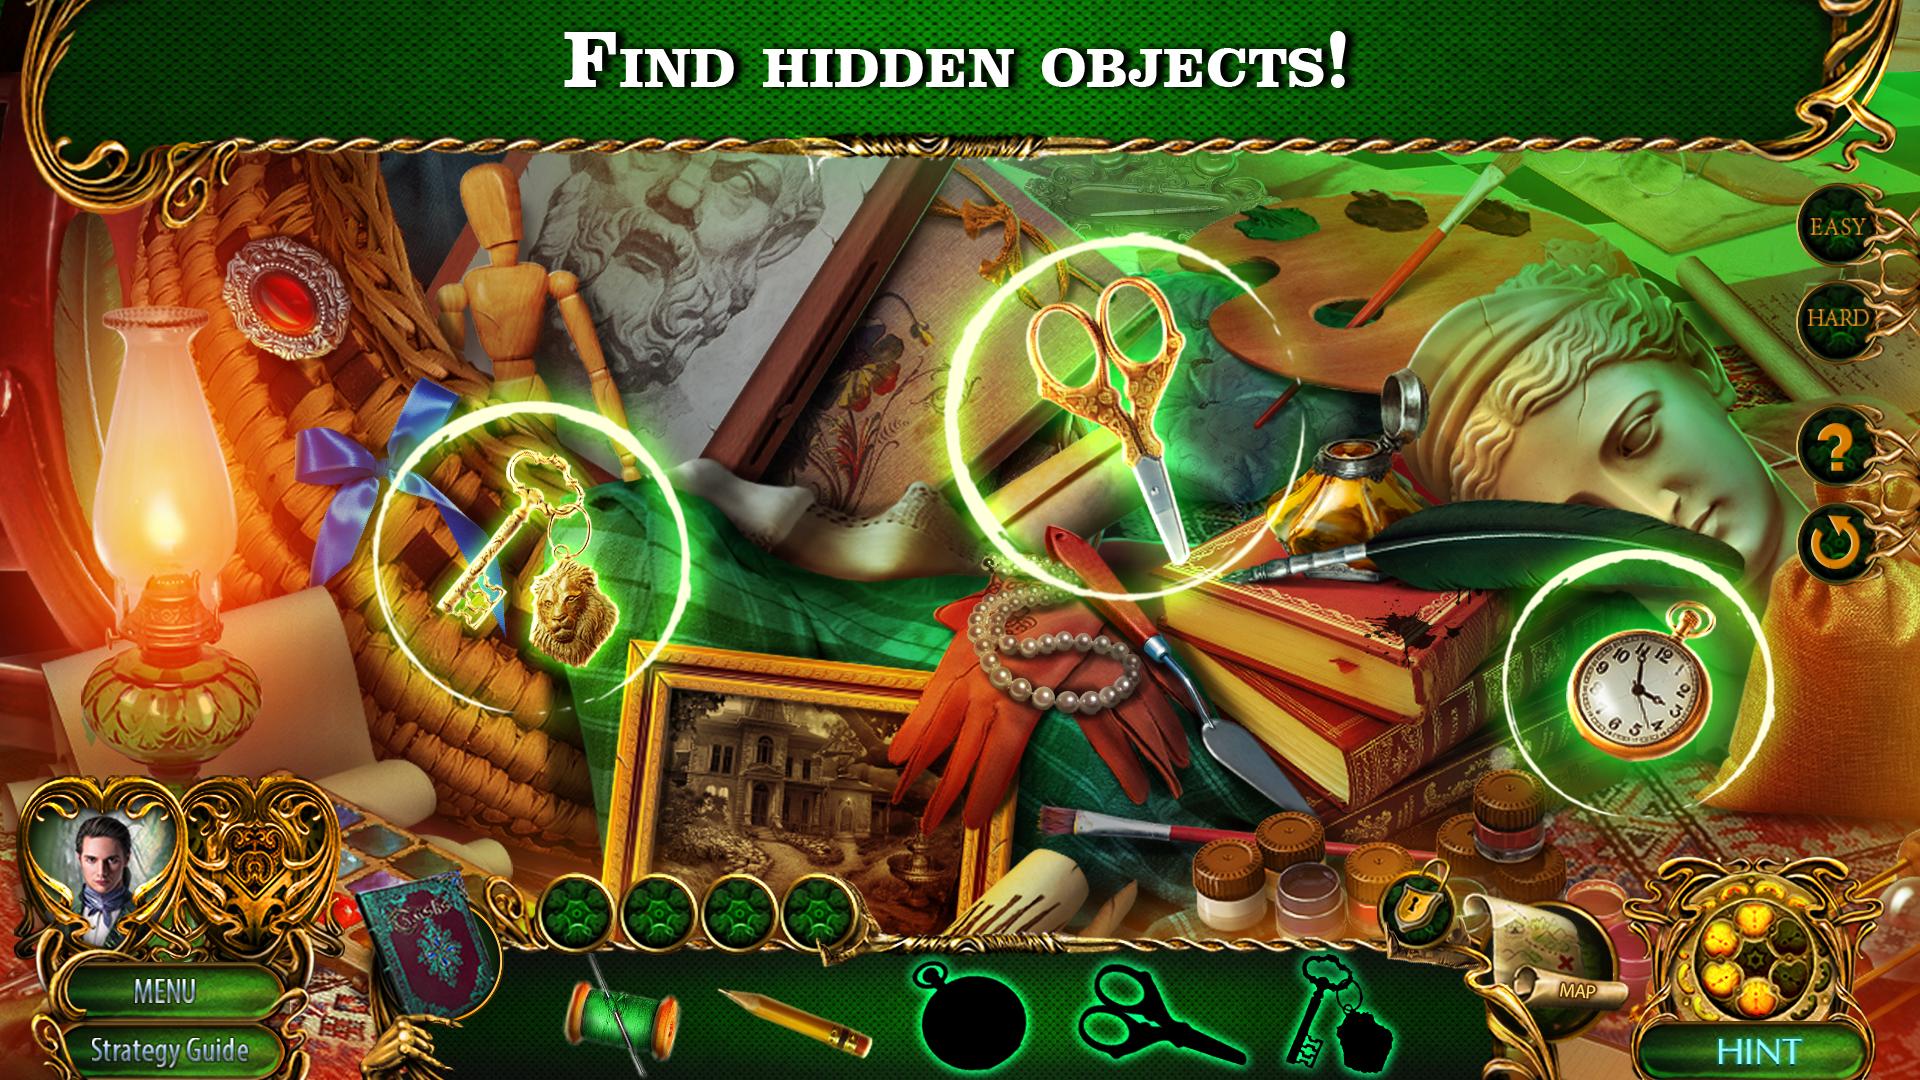 Hidden Objects - Dark Romance 7 (Free To Play) 1.0.5 Screenshot 6